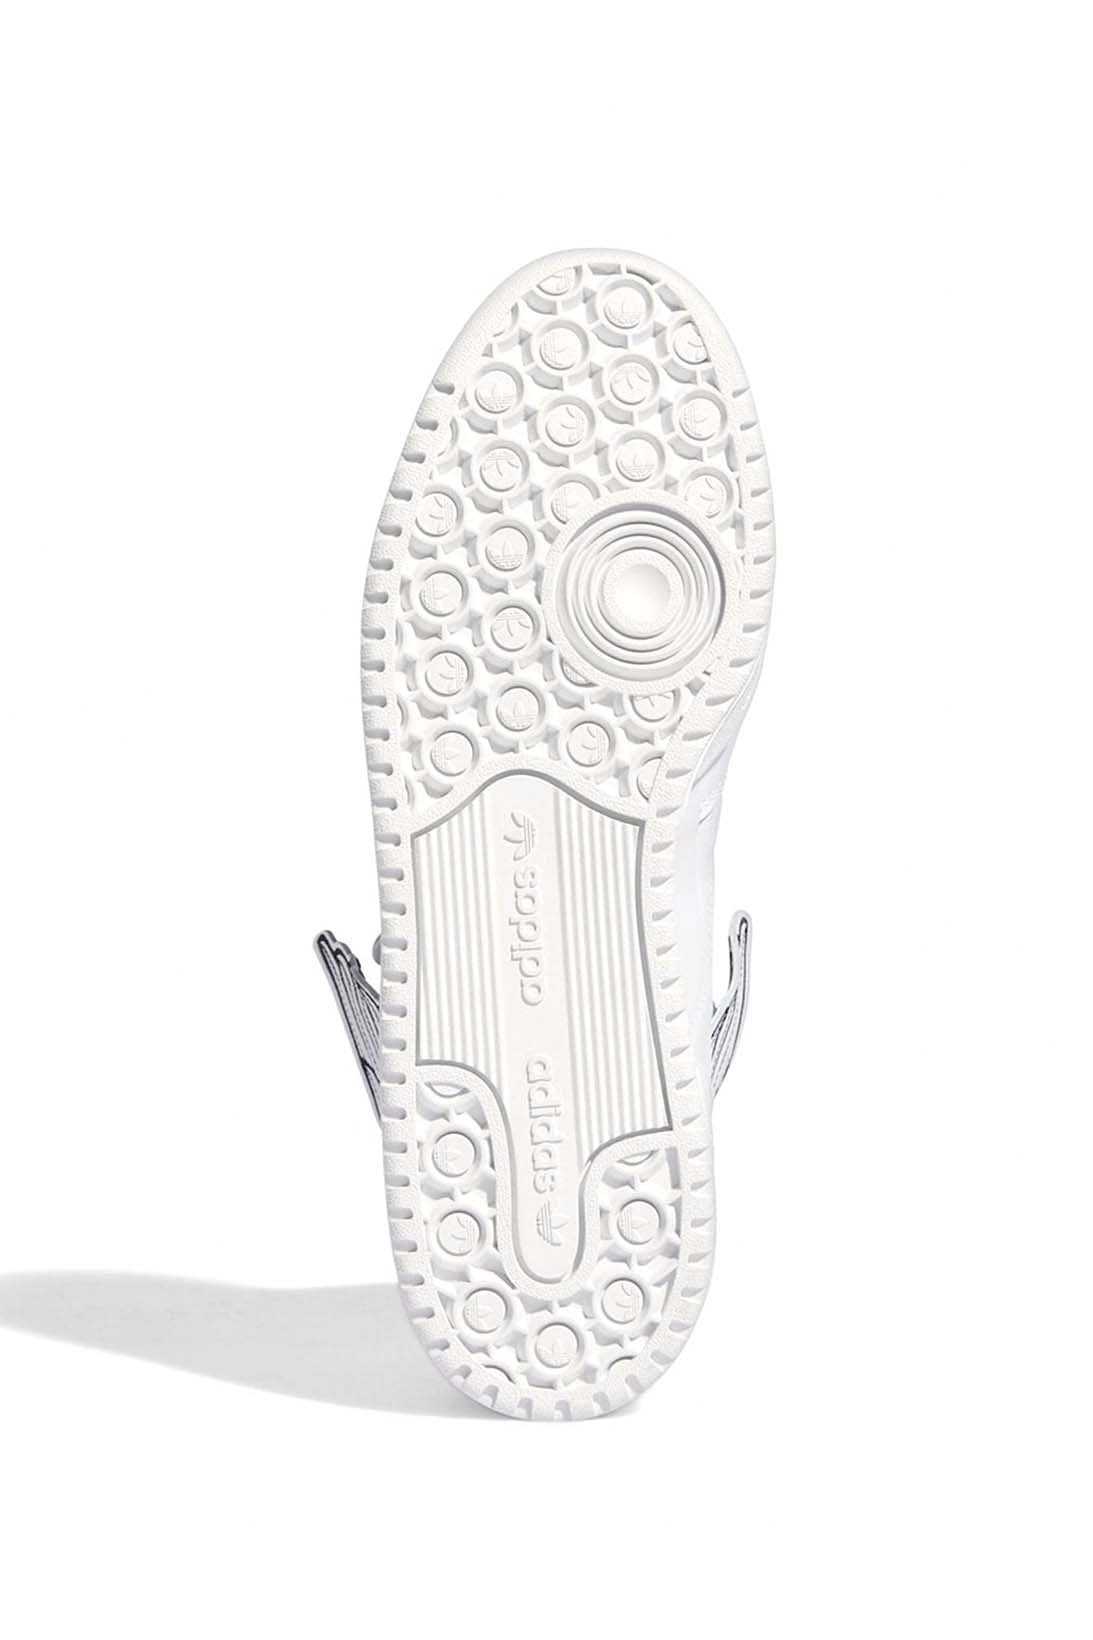 adidas Jeremy Scott Forum Wings 4.0 Opal Pack Unisex Shoes Launching 3/17